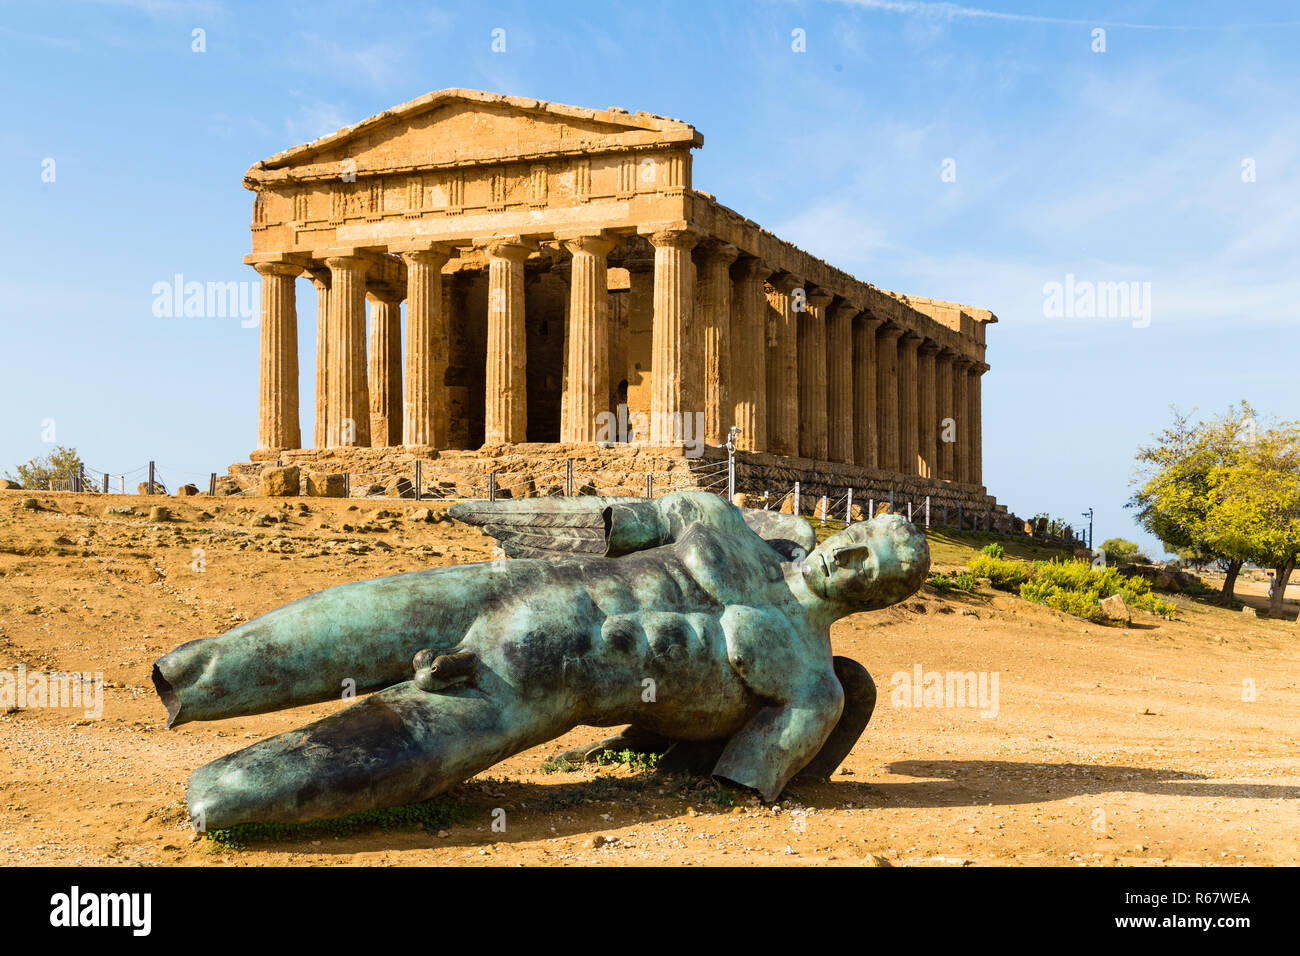 Statue of Icarus and the Temple of Concordia, Valle dei Templi, Agrigento, Sicily, Italy Stock Photo